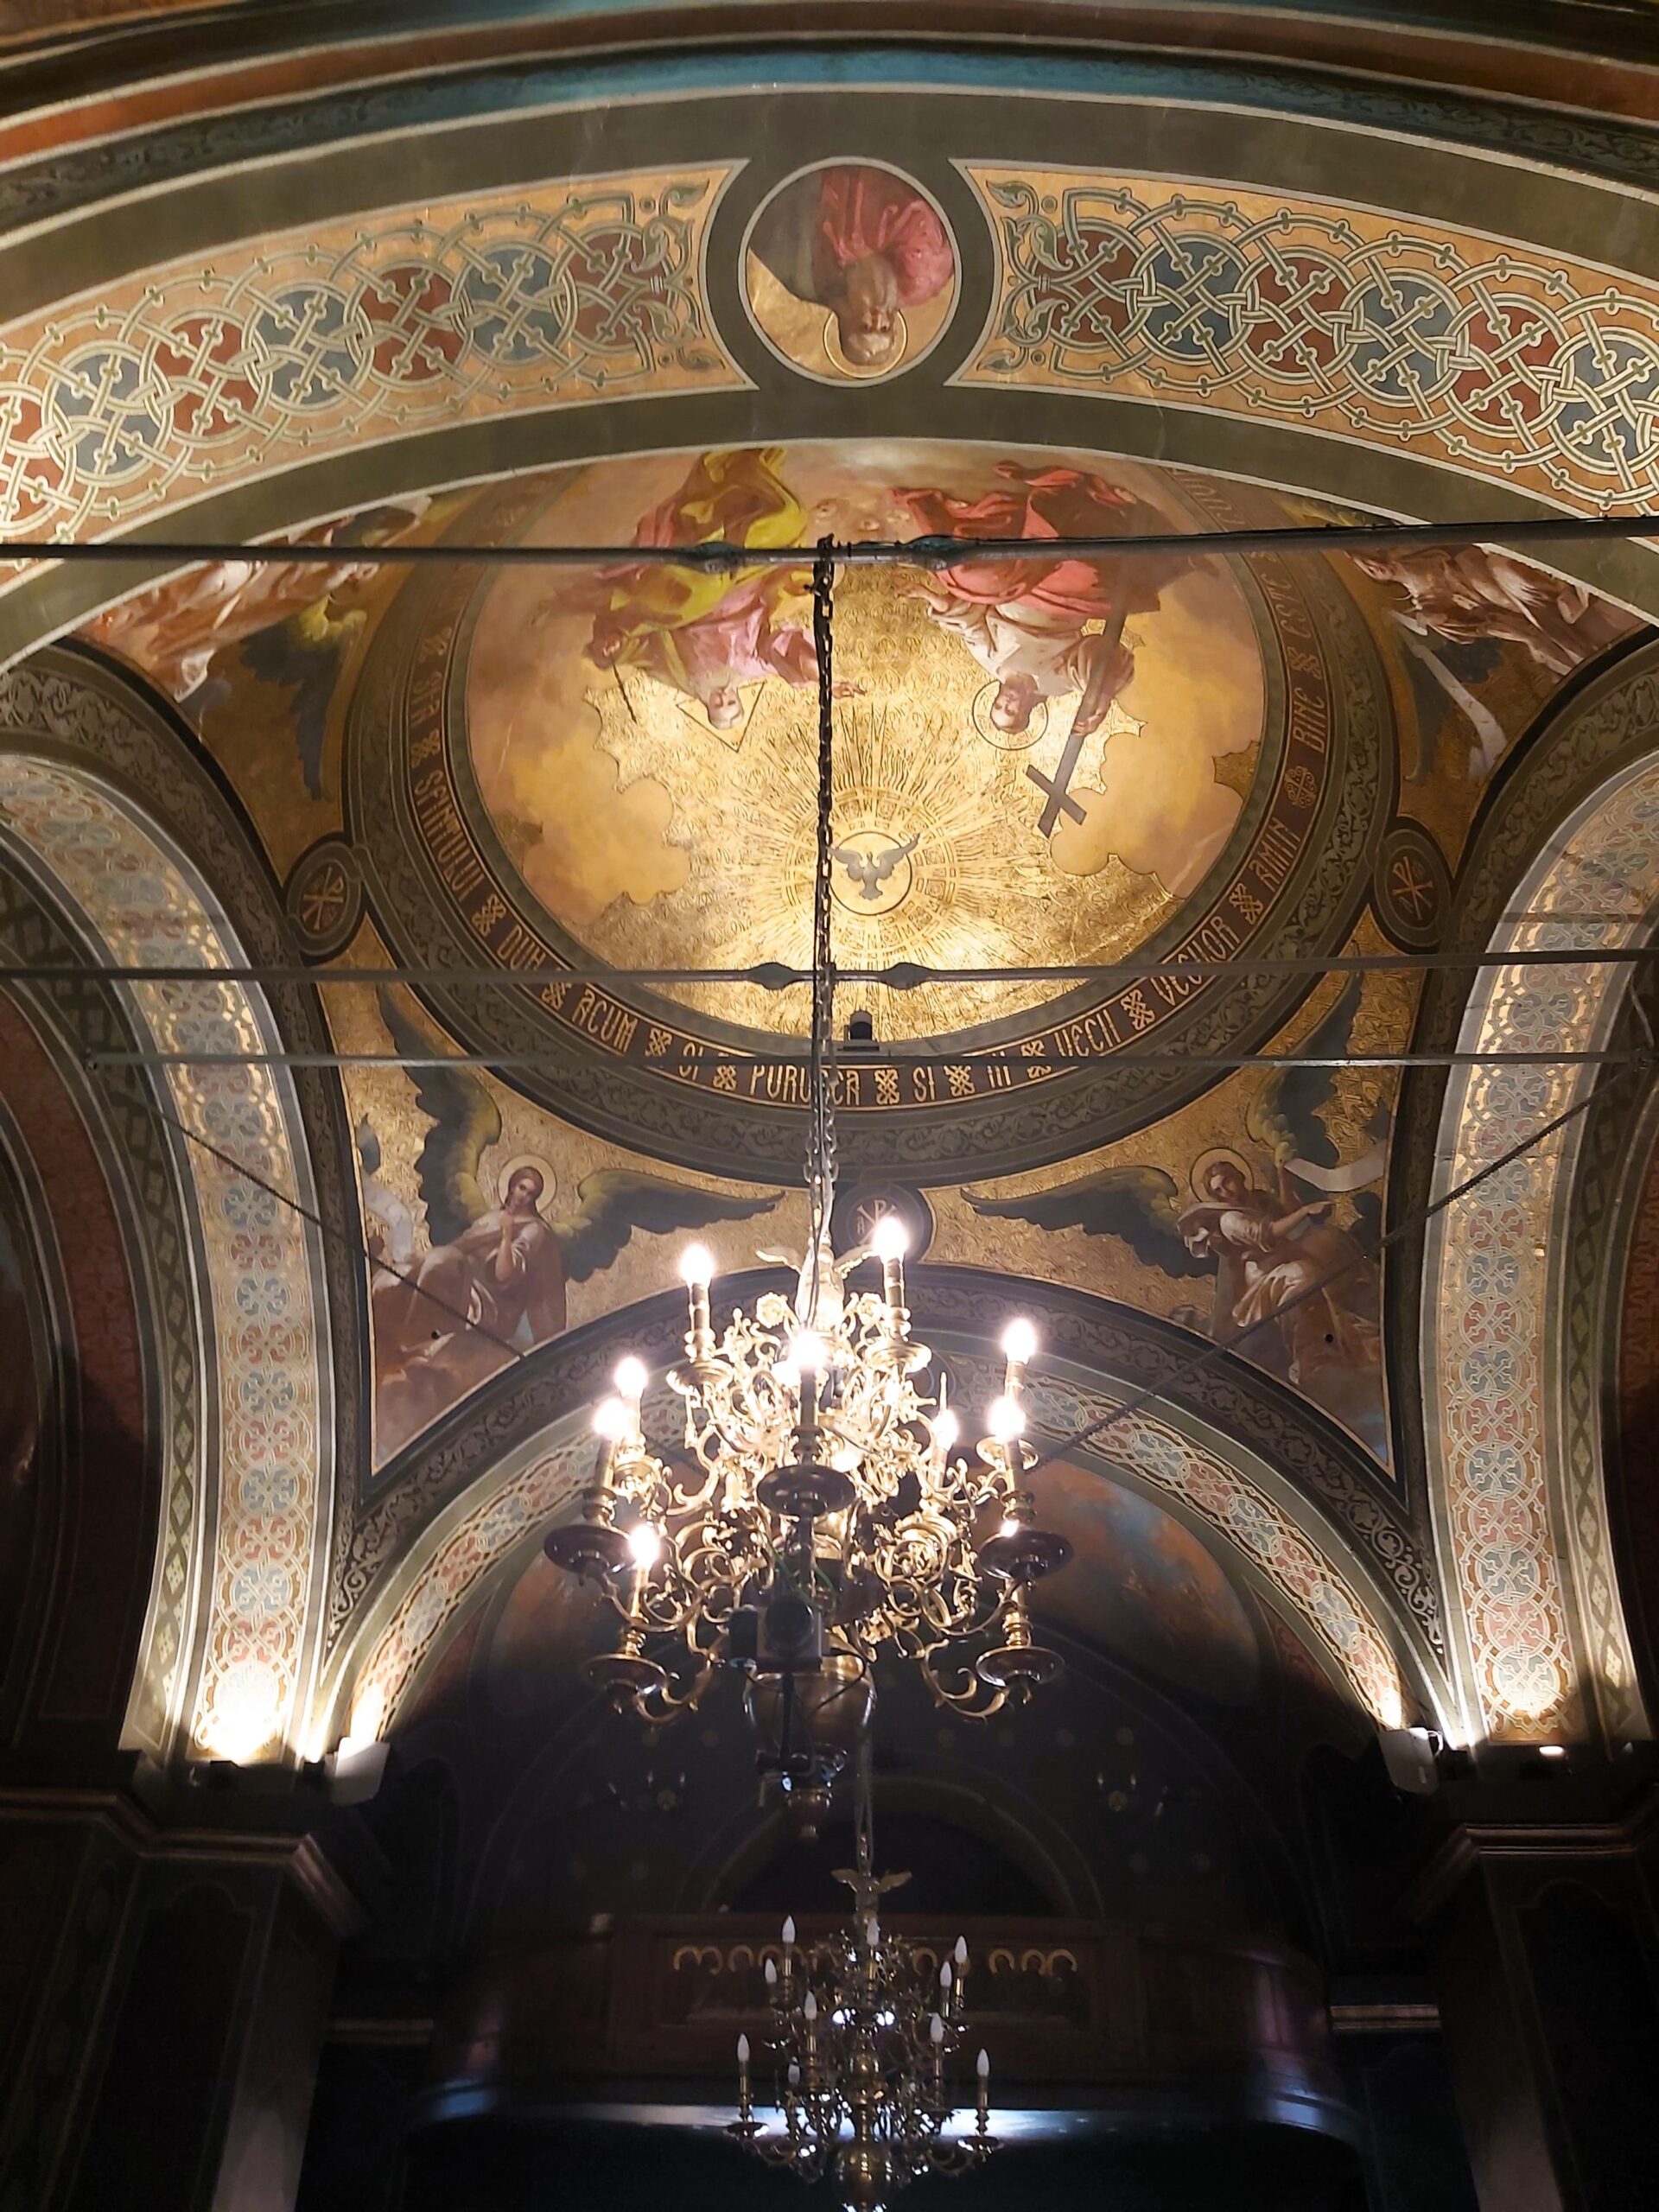 The golden ceiling and chandelier in Biserica Albă in București, Romania